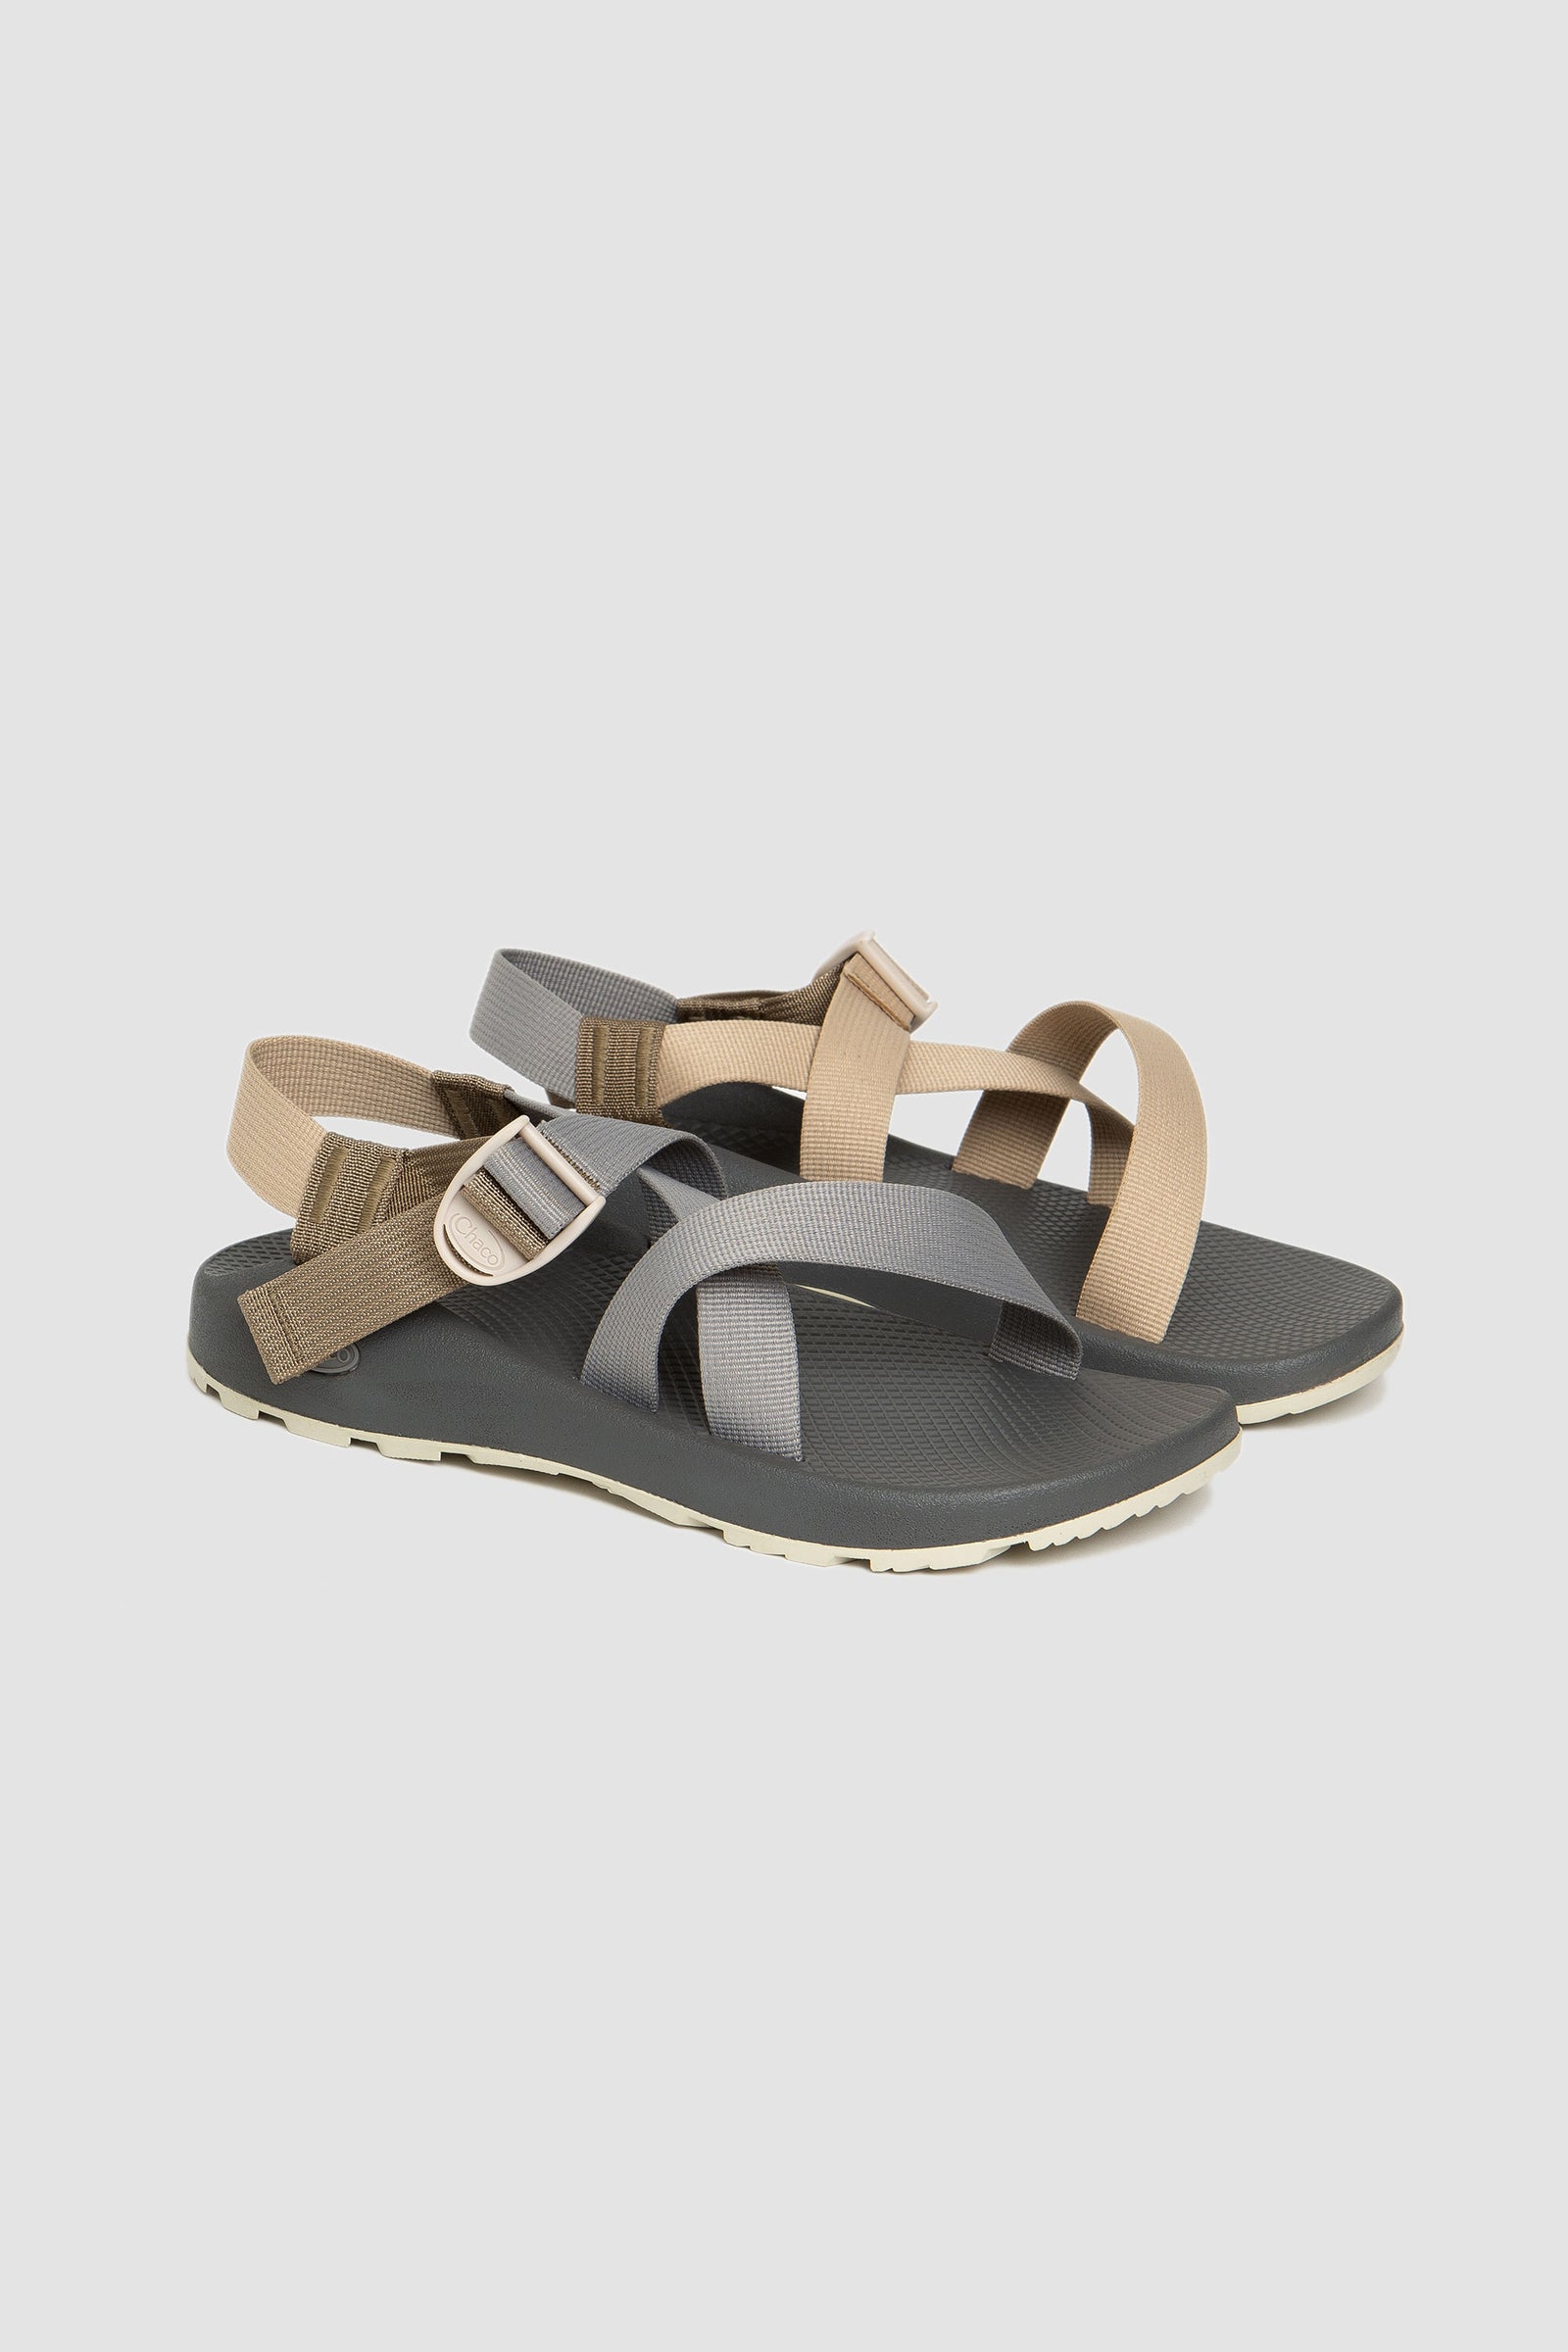 SPORTIVO [Z1 classic sandals earth grey]